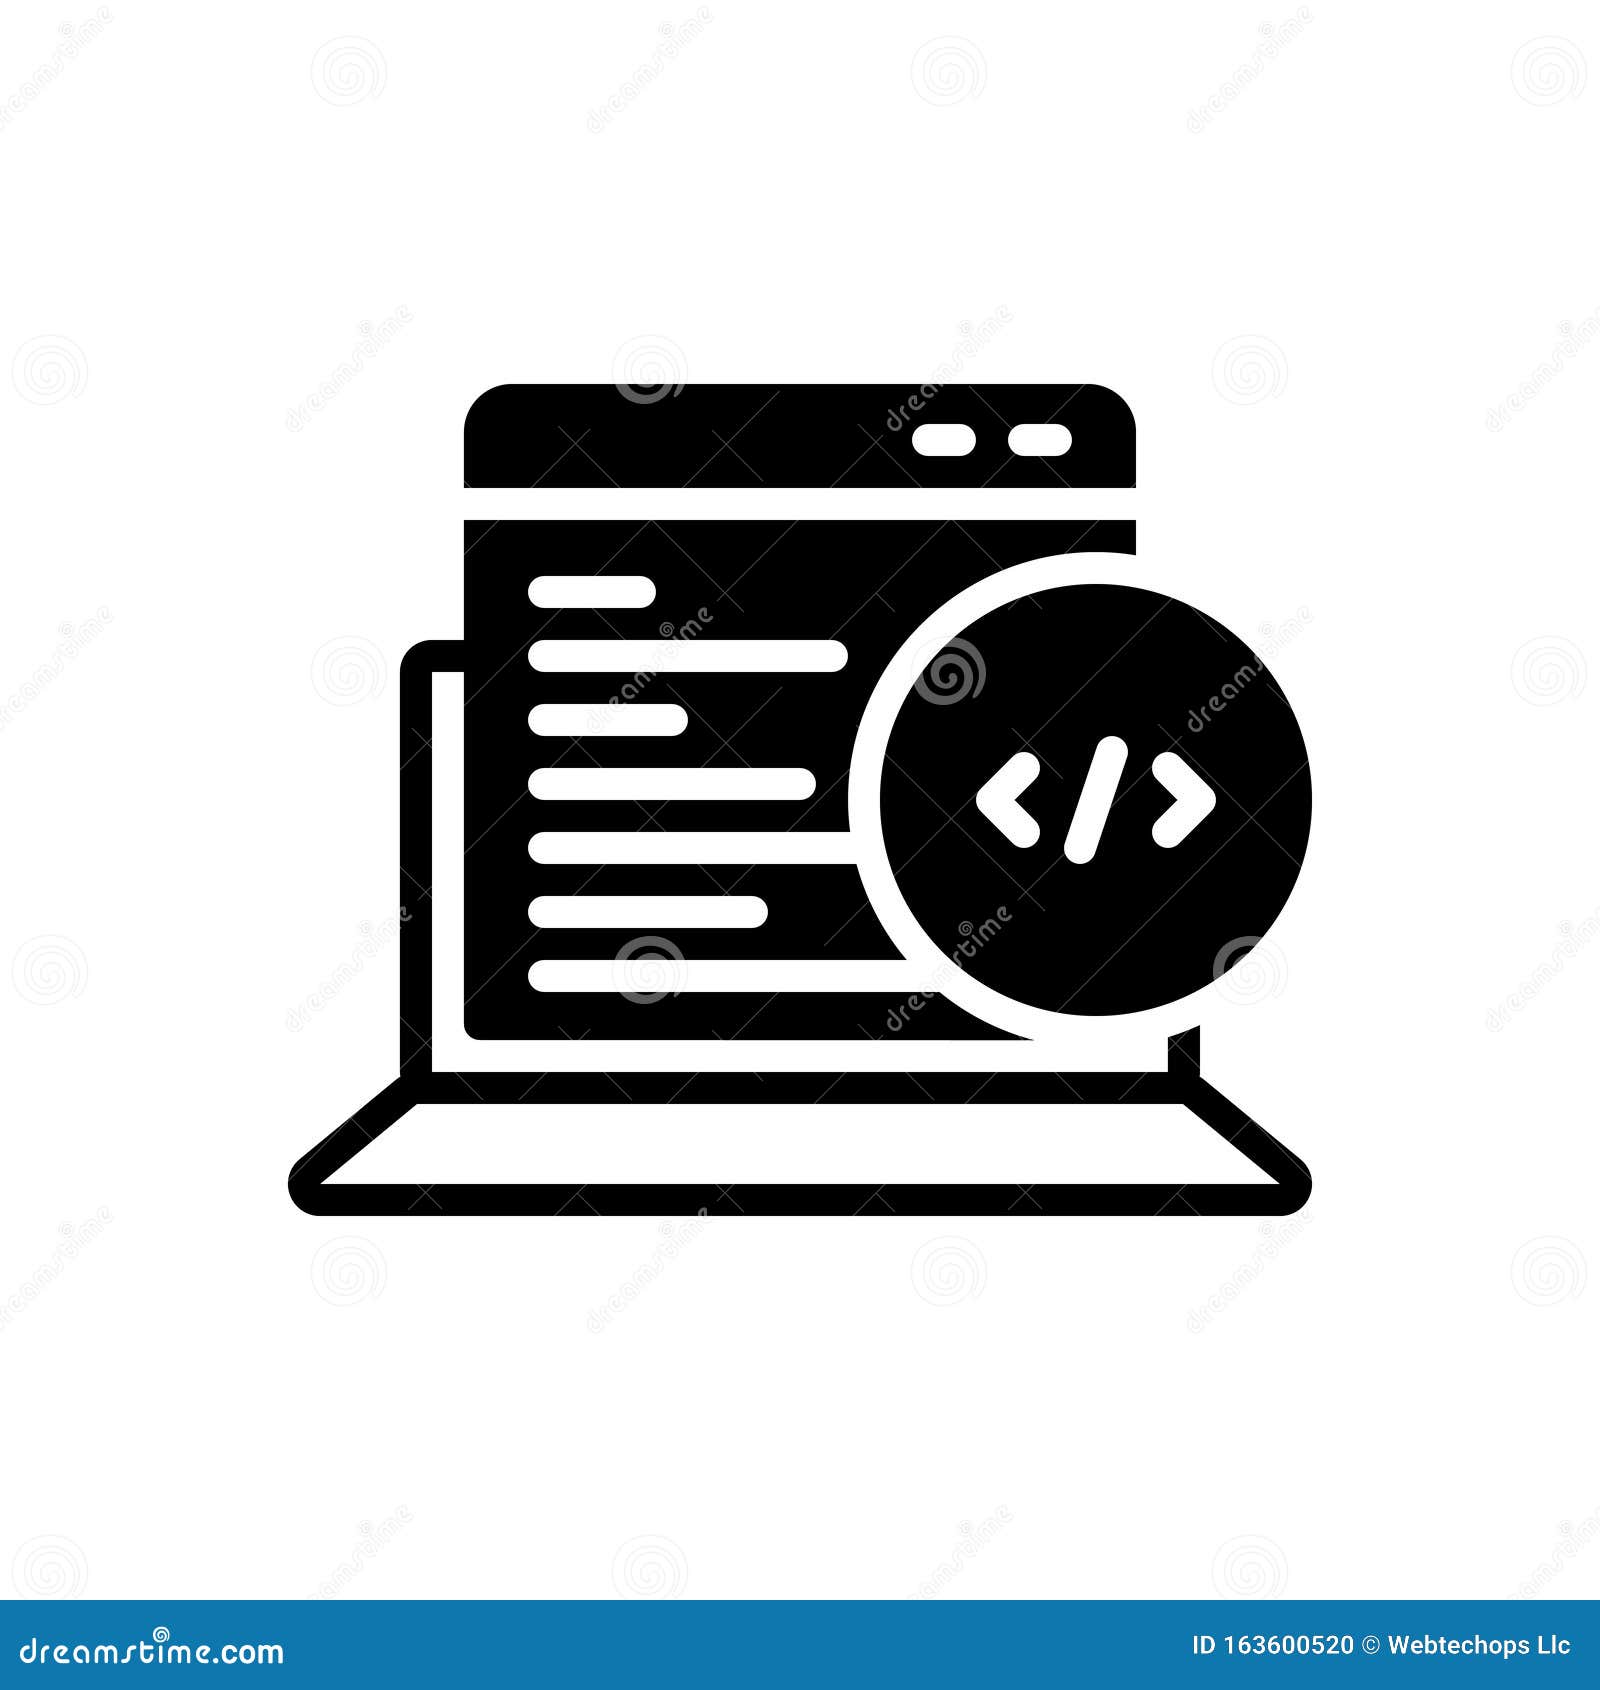 black solid icon for web coding, summarize and arrange